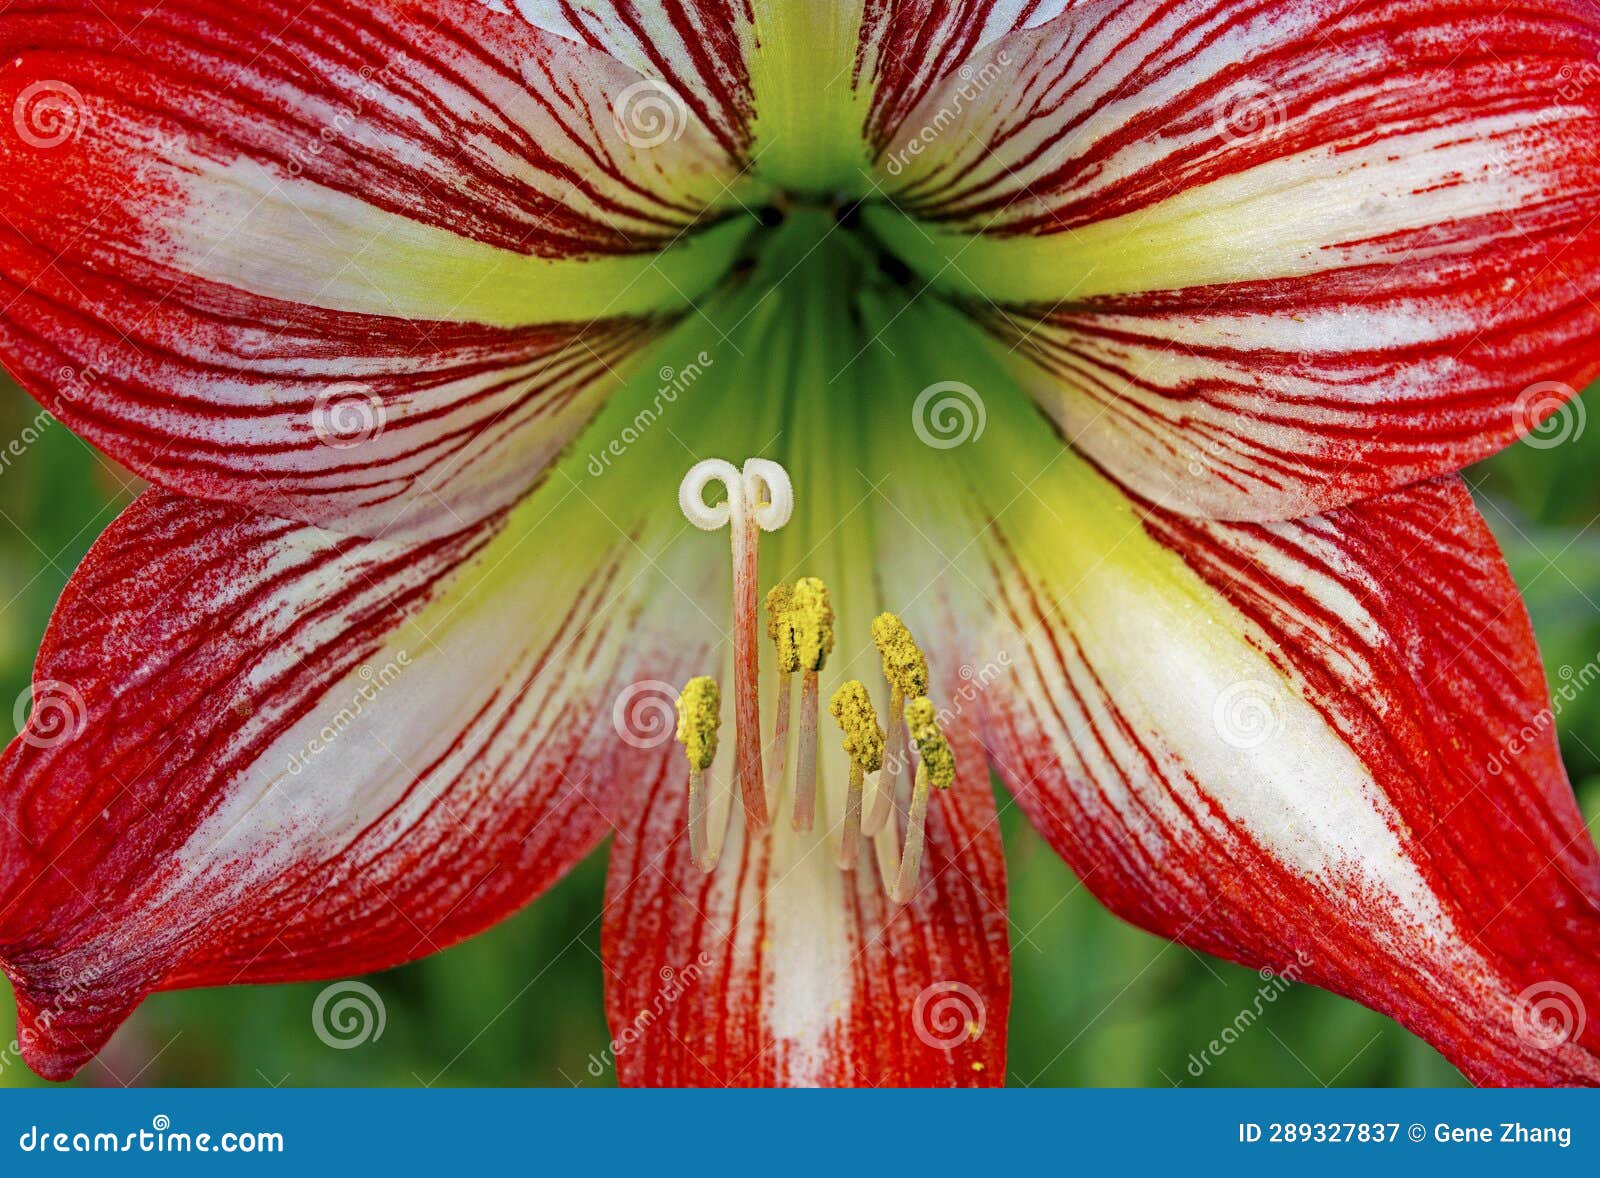 Flower Details of Hippeastrum Vittatum Stock Image - Image of pistil ...